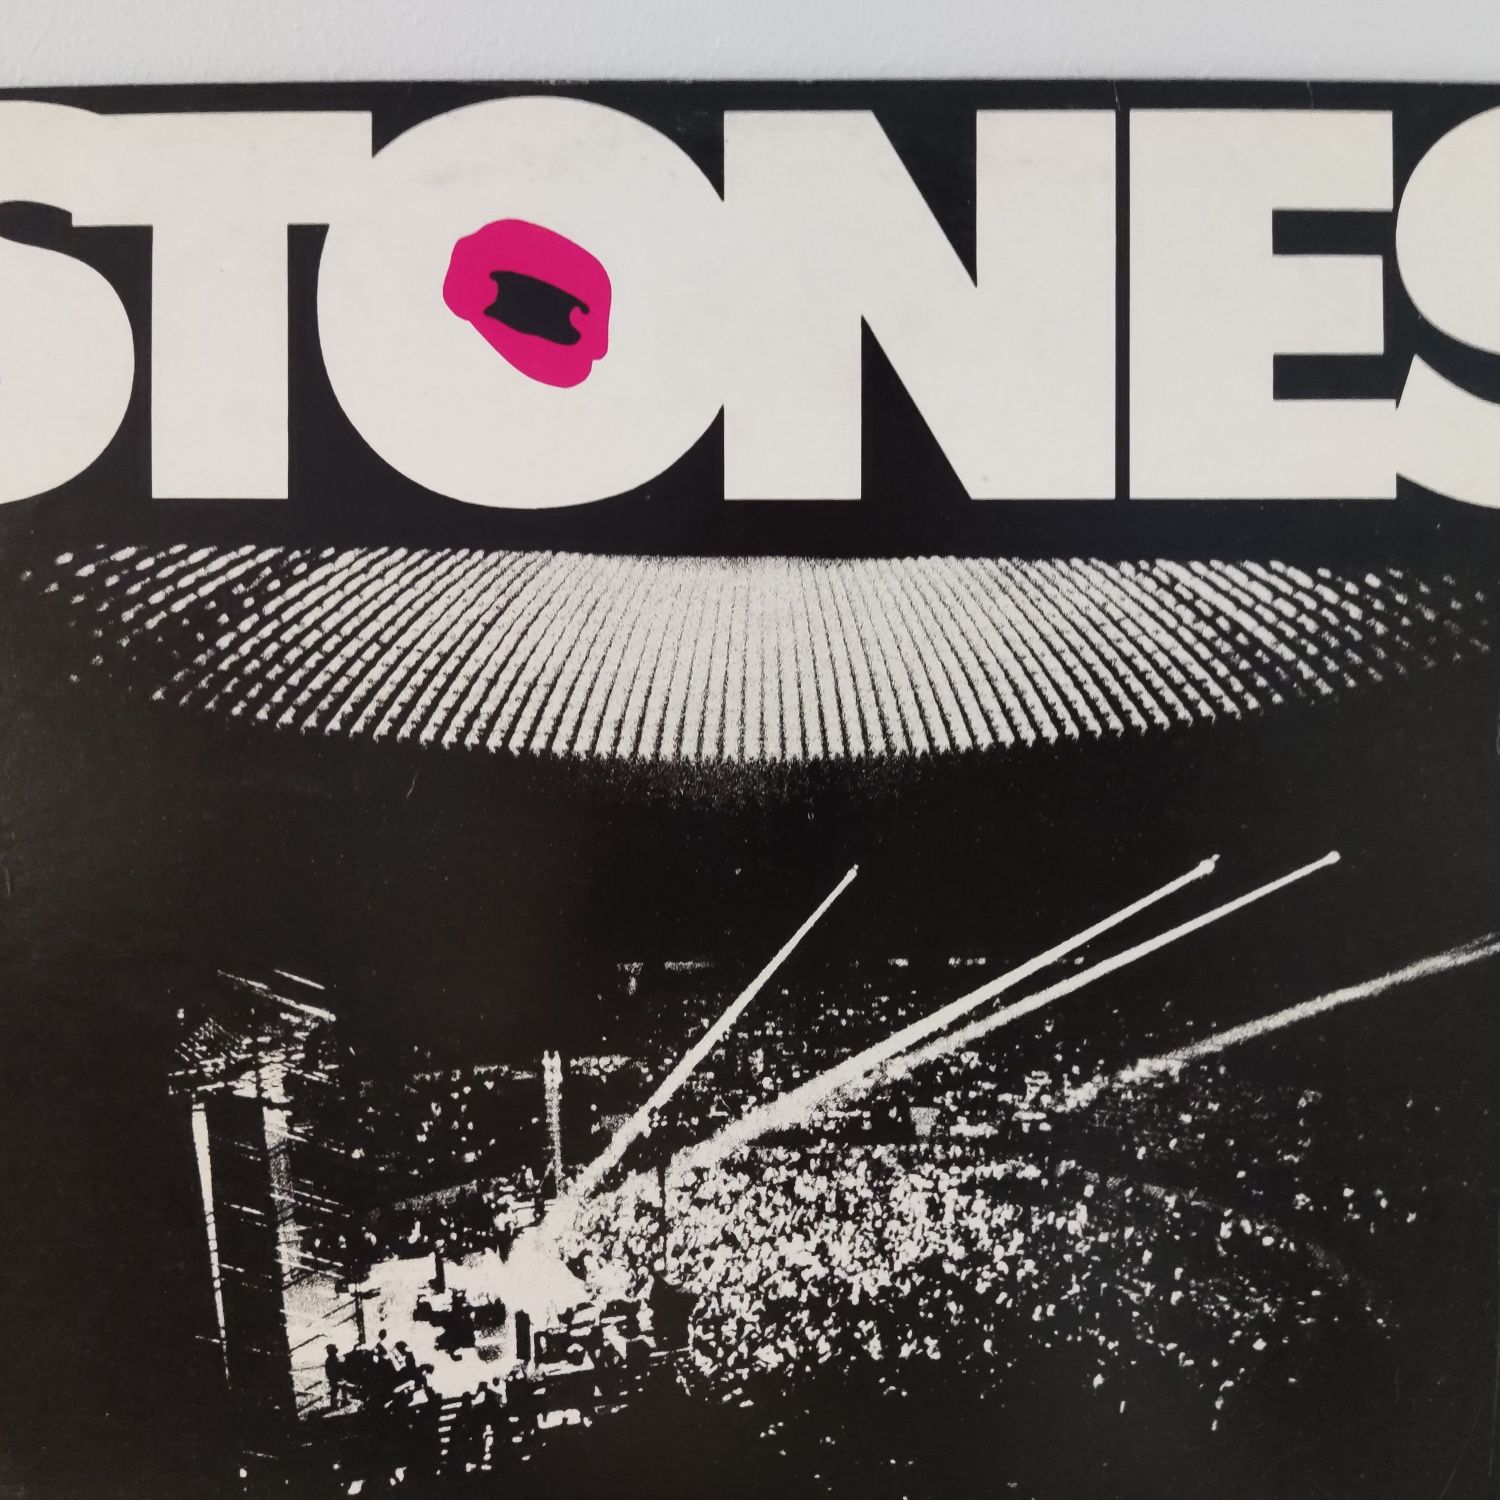 The Rolling Stones – Stones (Australia) Disco de Vinil (vinyl)